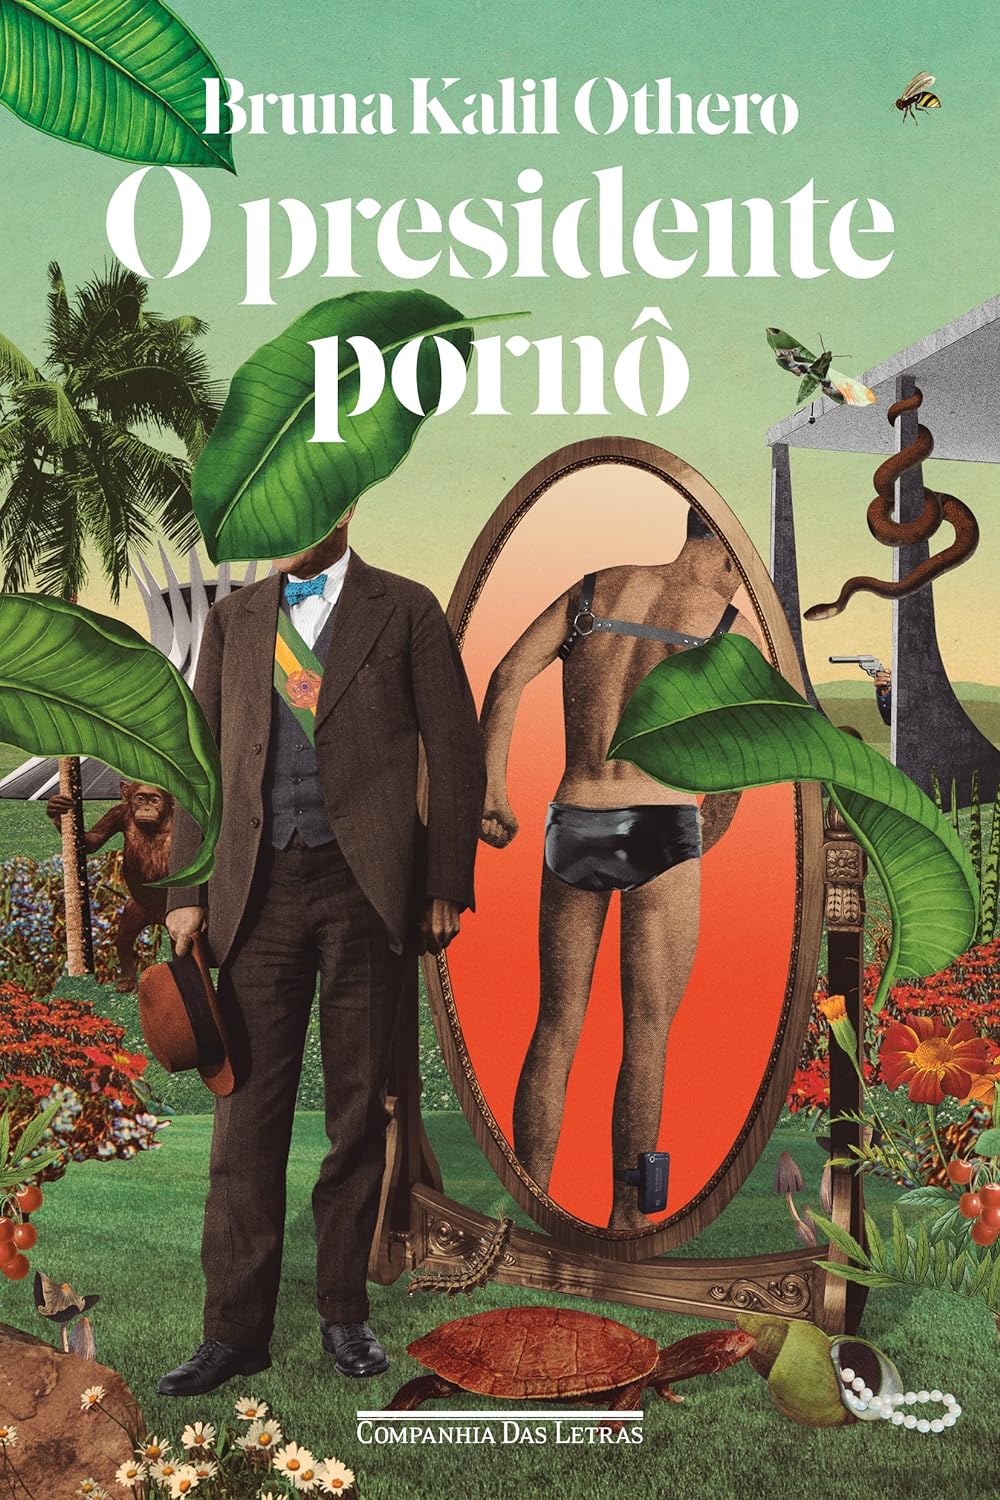 Bruna Kalil Othero: O presidente pornô (Paperback, português language, 2023, Companhia das Letras)